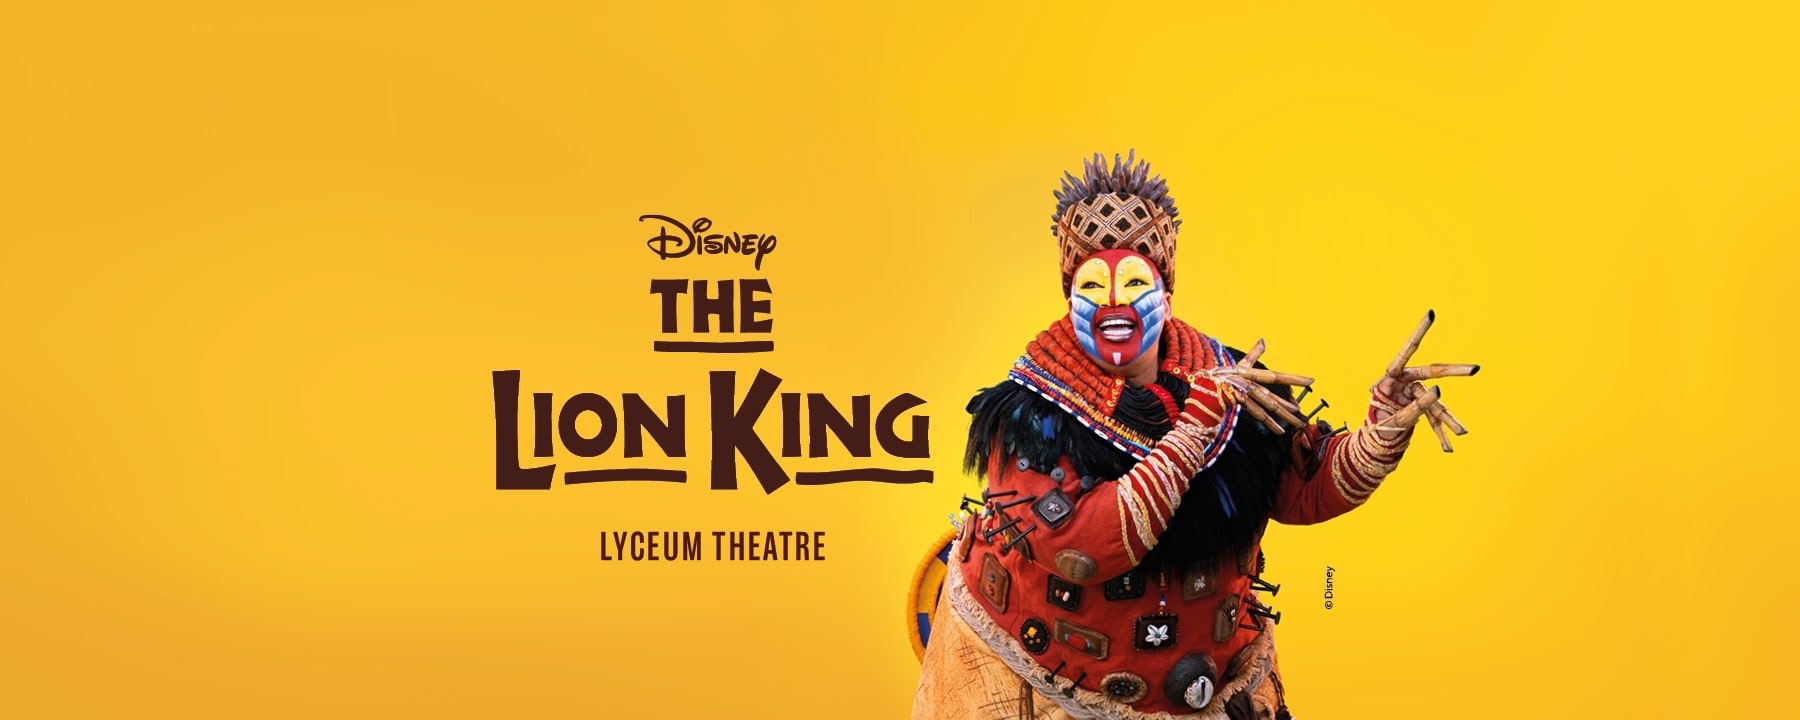 Disneys the lion king marquee Q1l3